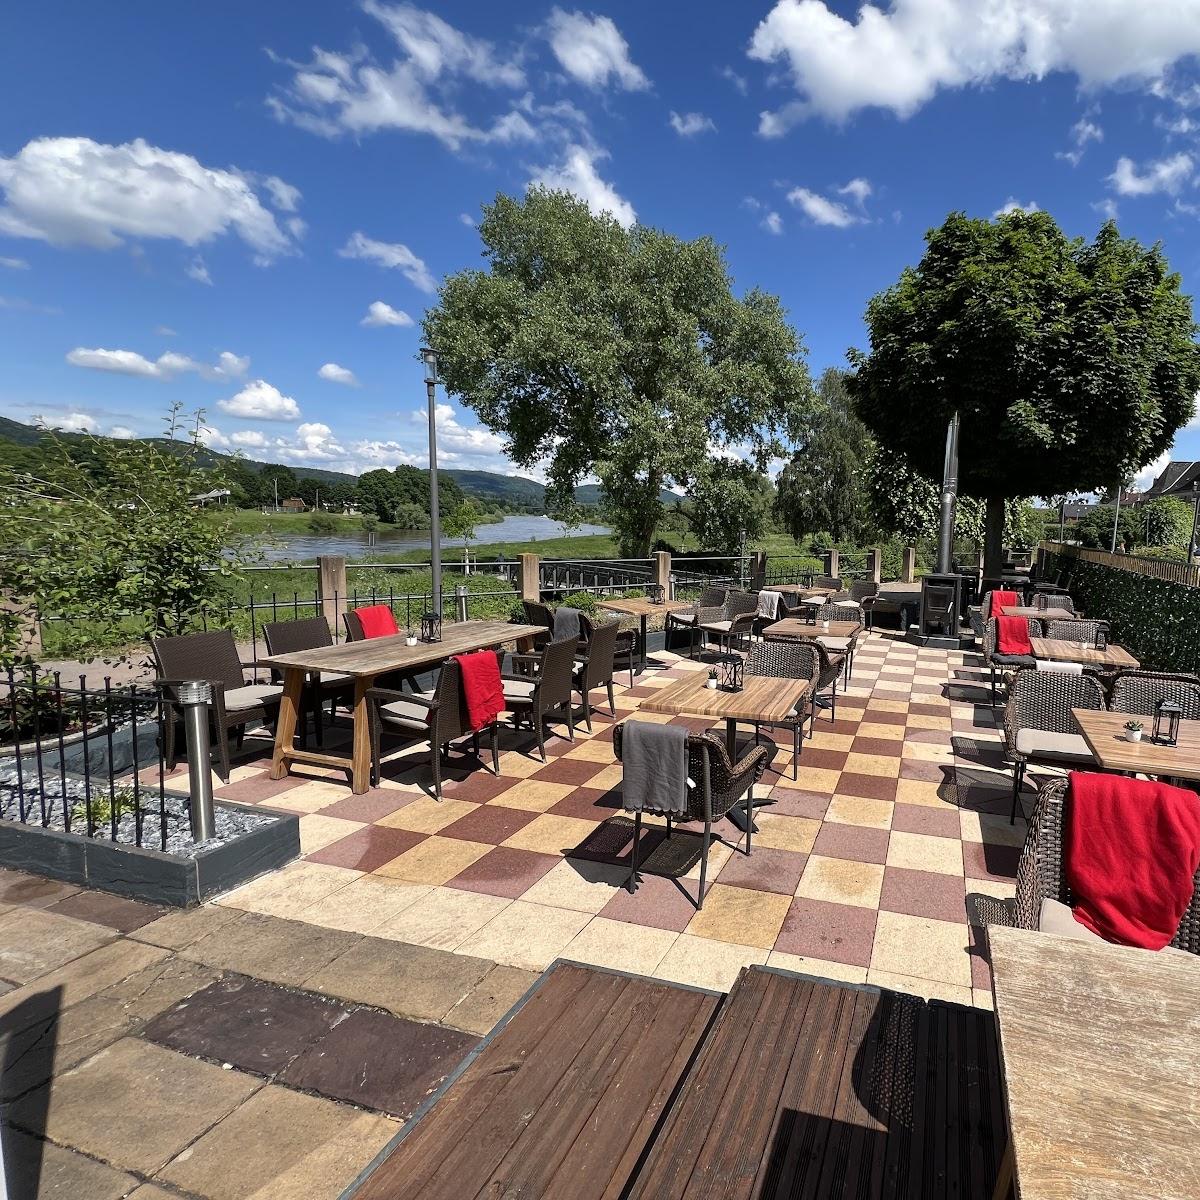 Restaurant "River Lounge" in Rinteln